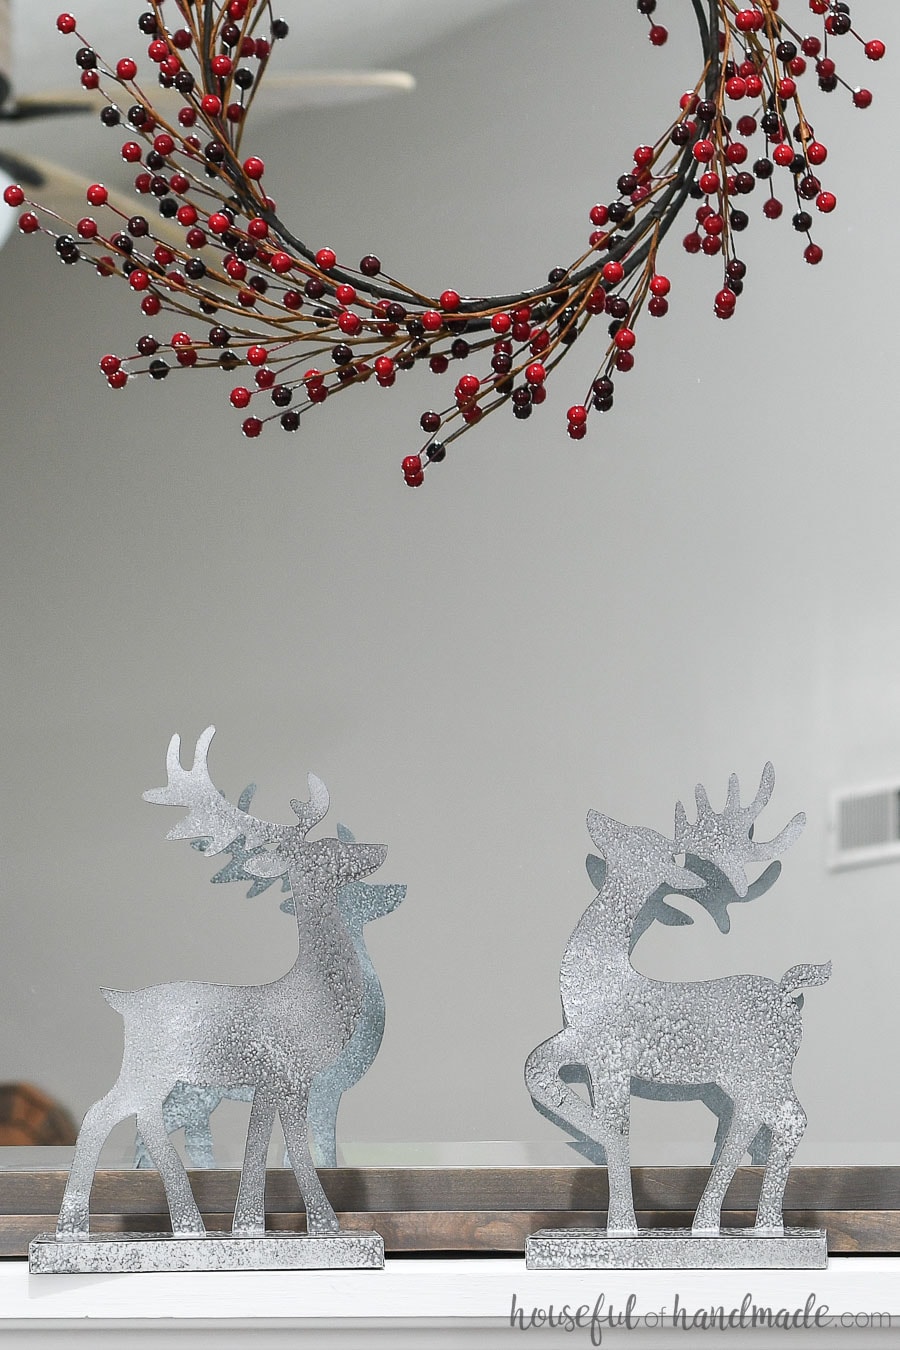 7 Days of Paper Christmas Decor: Christmas Reindeer Figurines ...